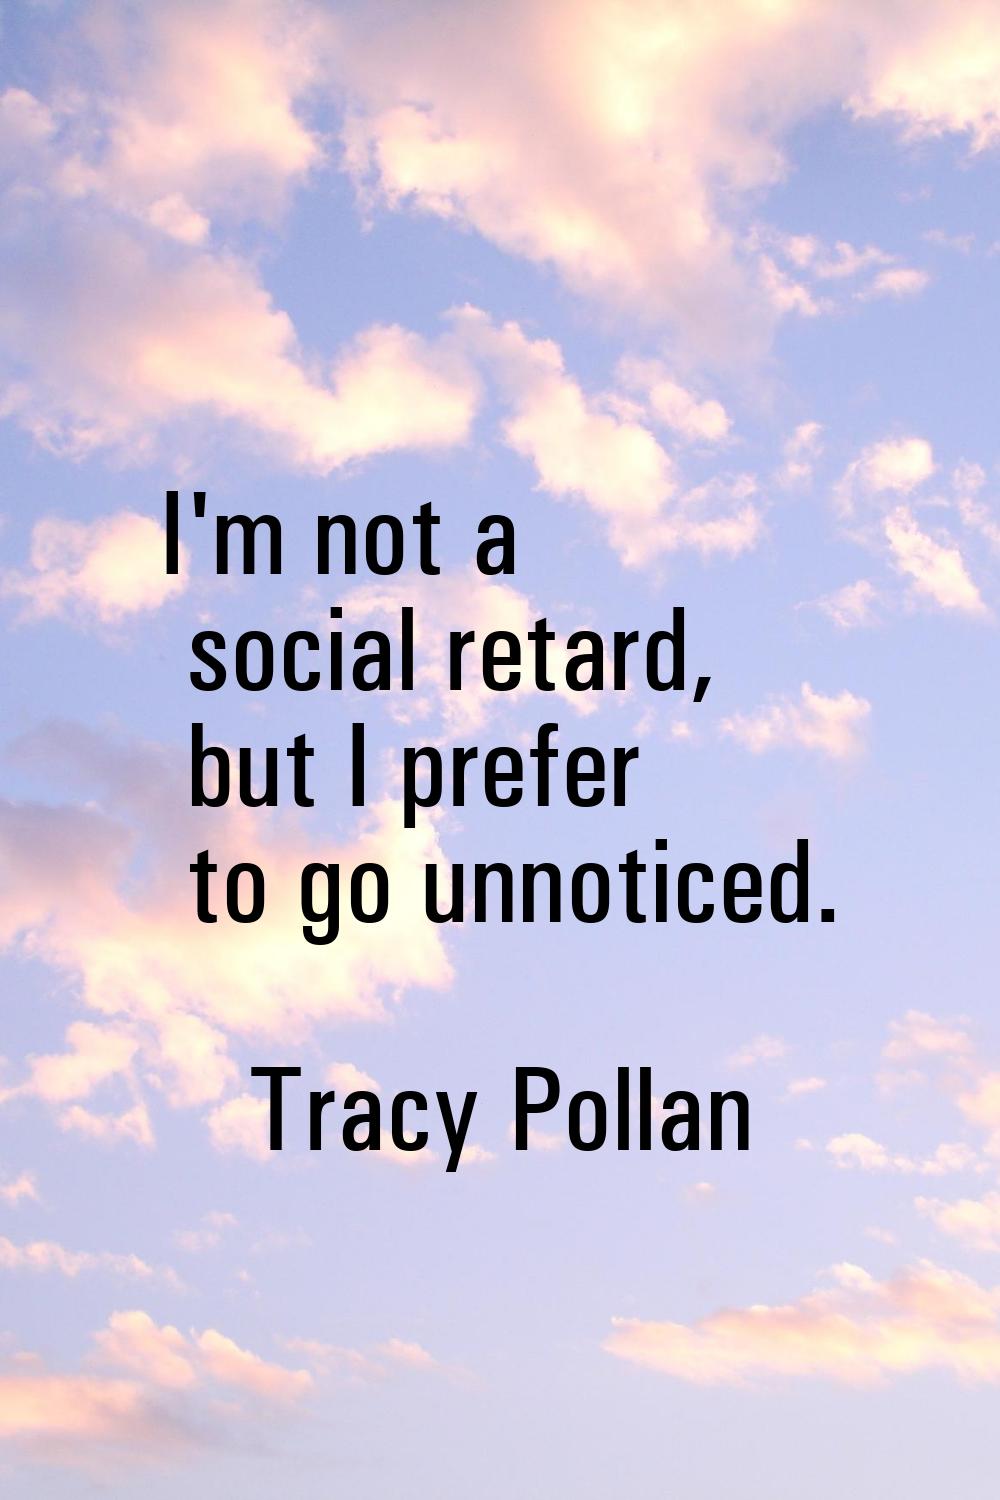 I'm not a social retard, but I prefer to go unnoticed.